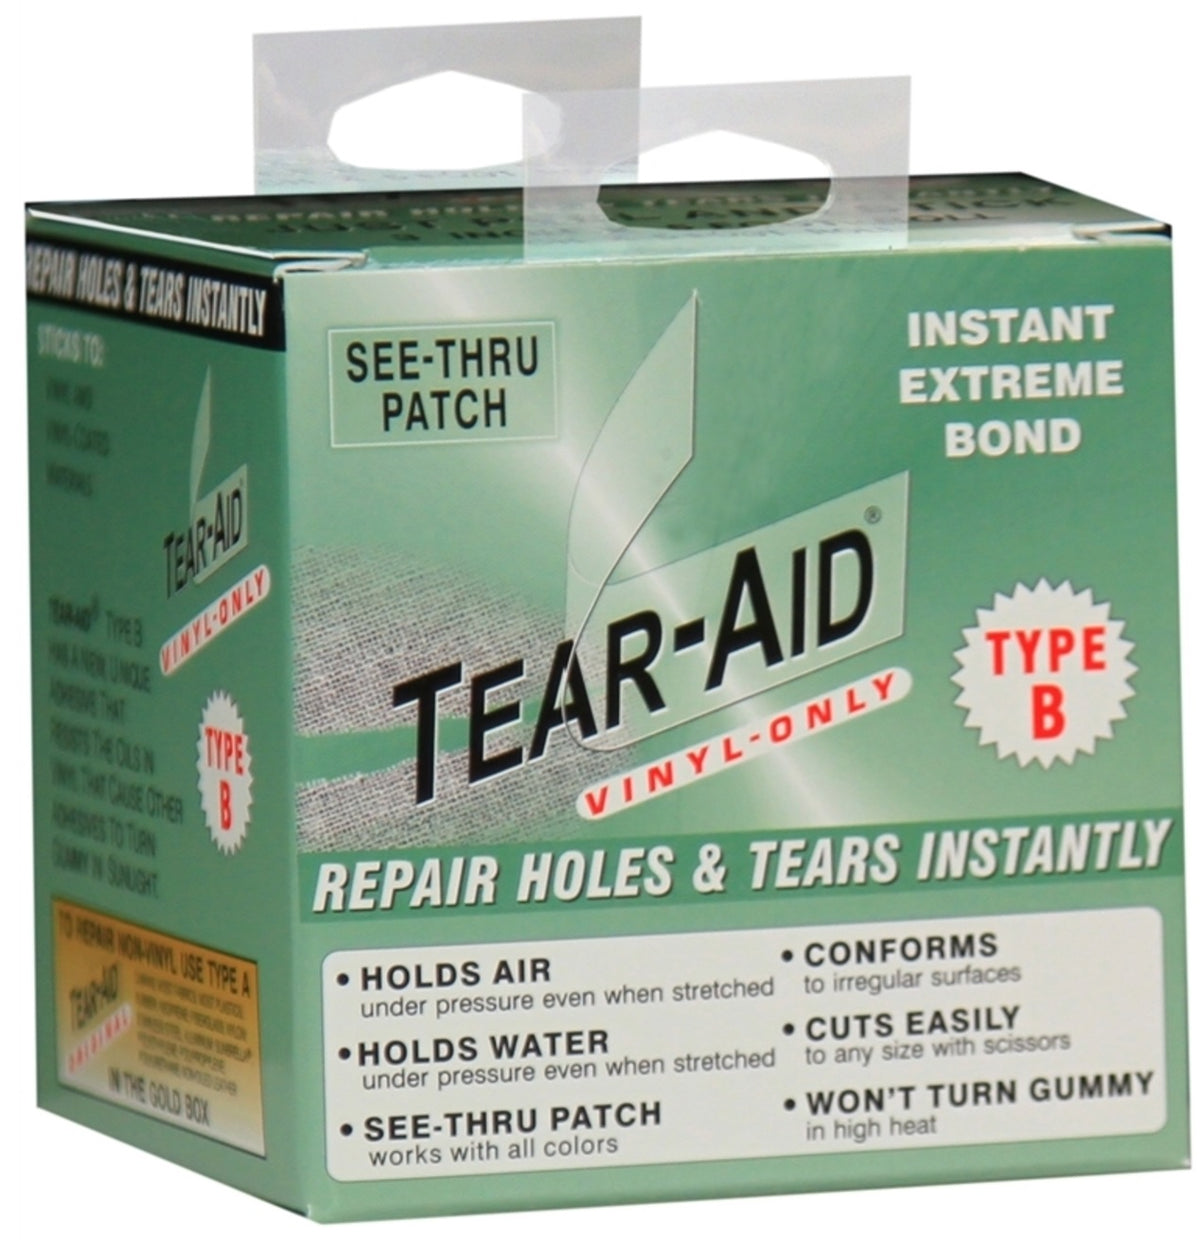 Tear-Aid D-ROLL-B-20 Vinyl-Coated Repair Patch, Green